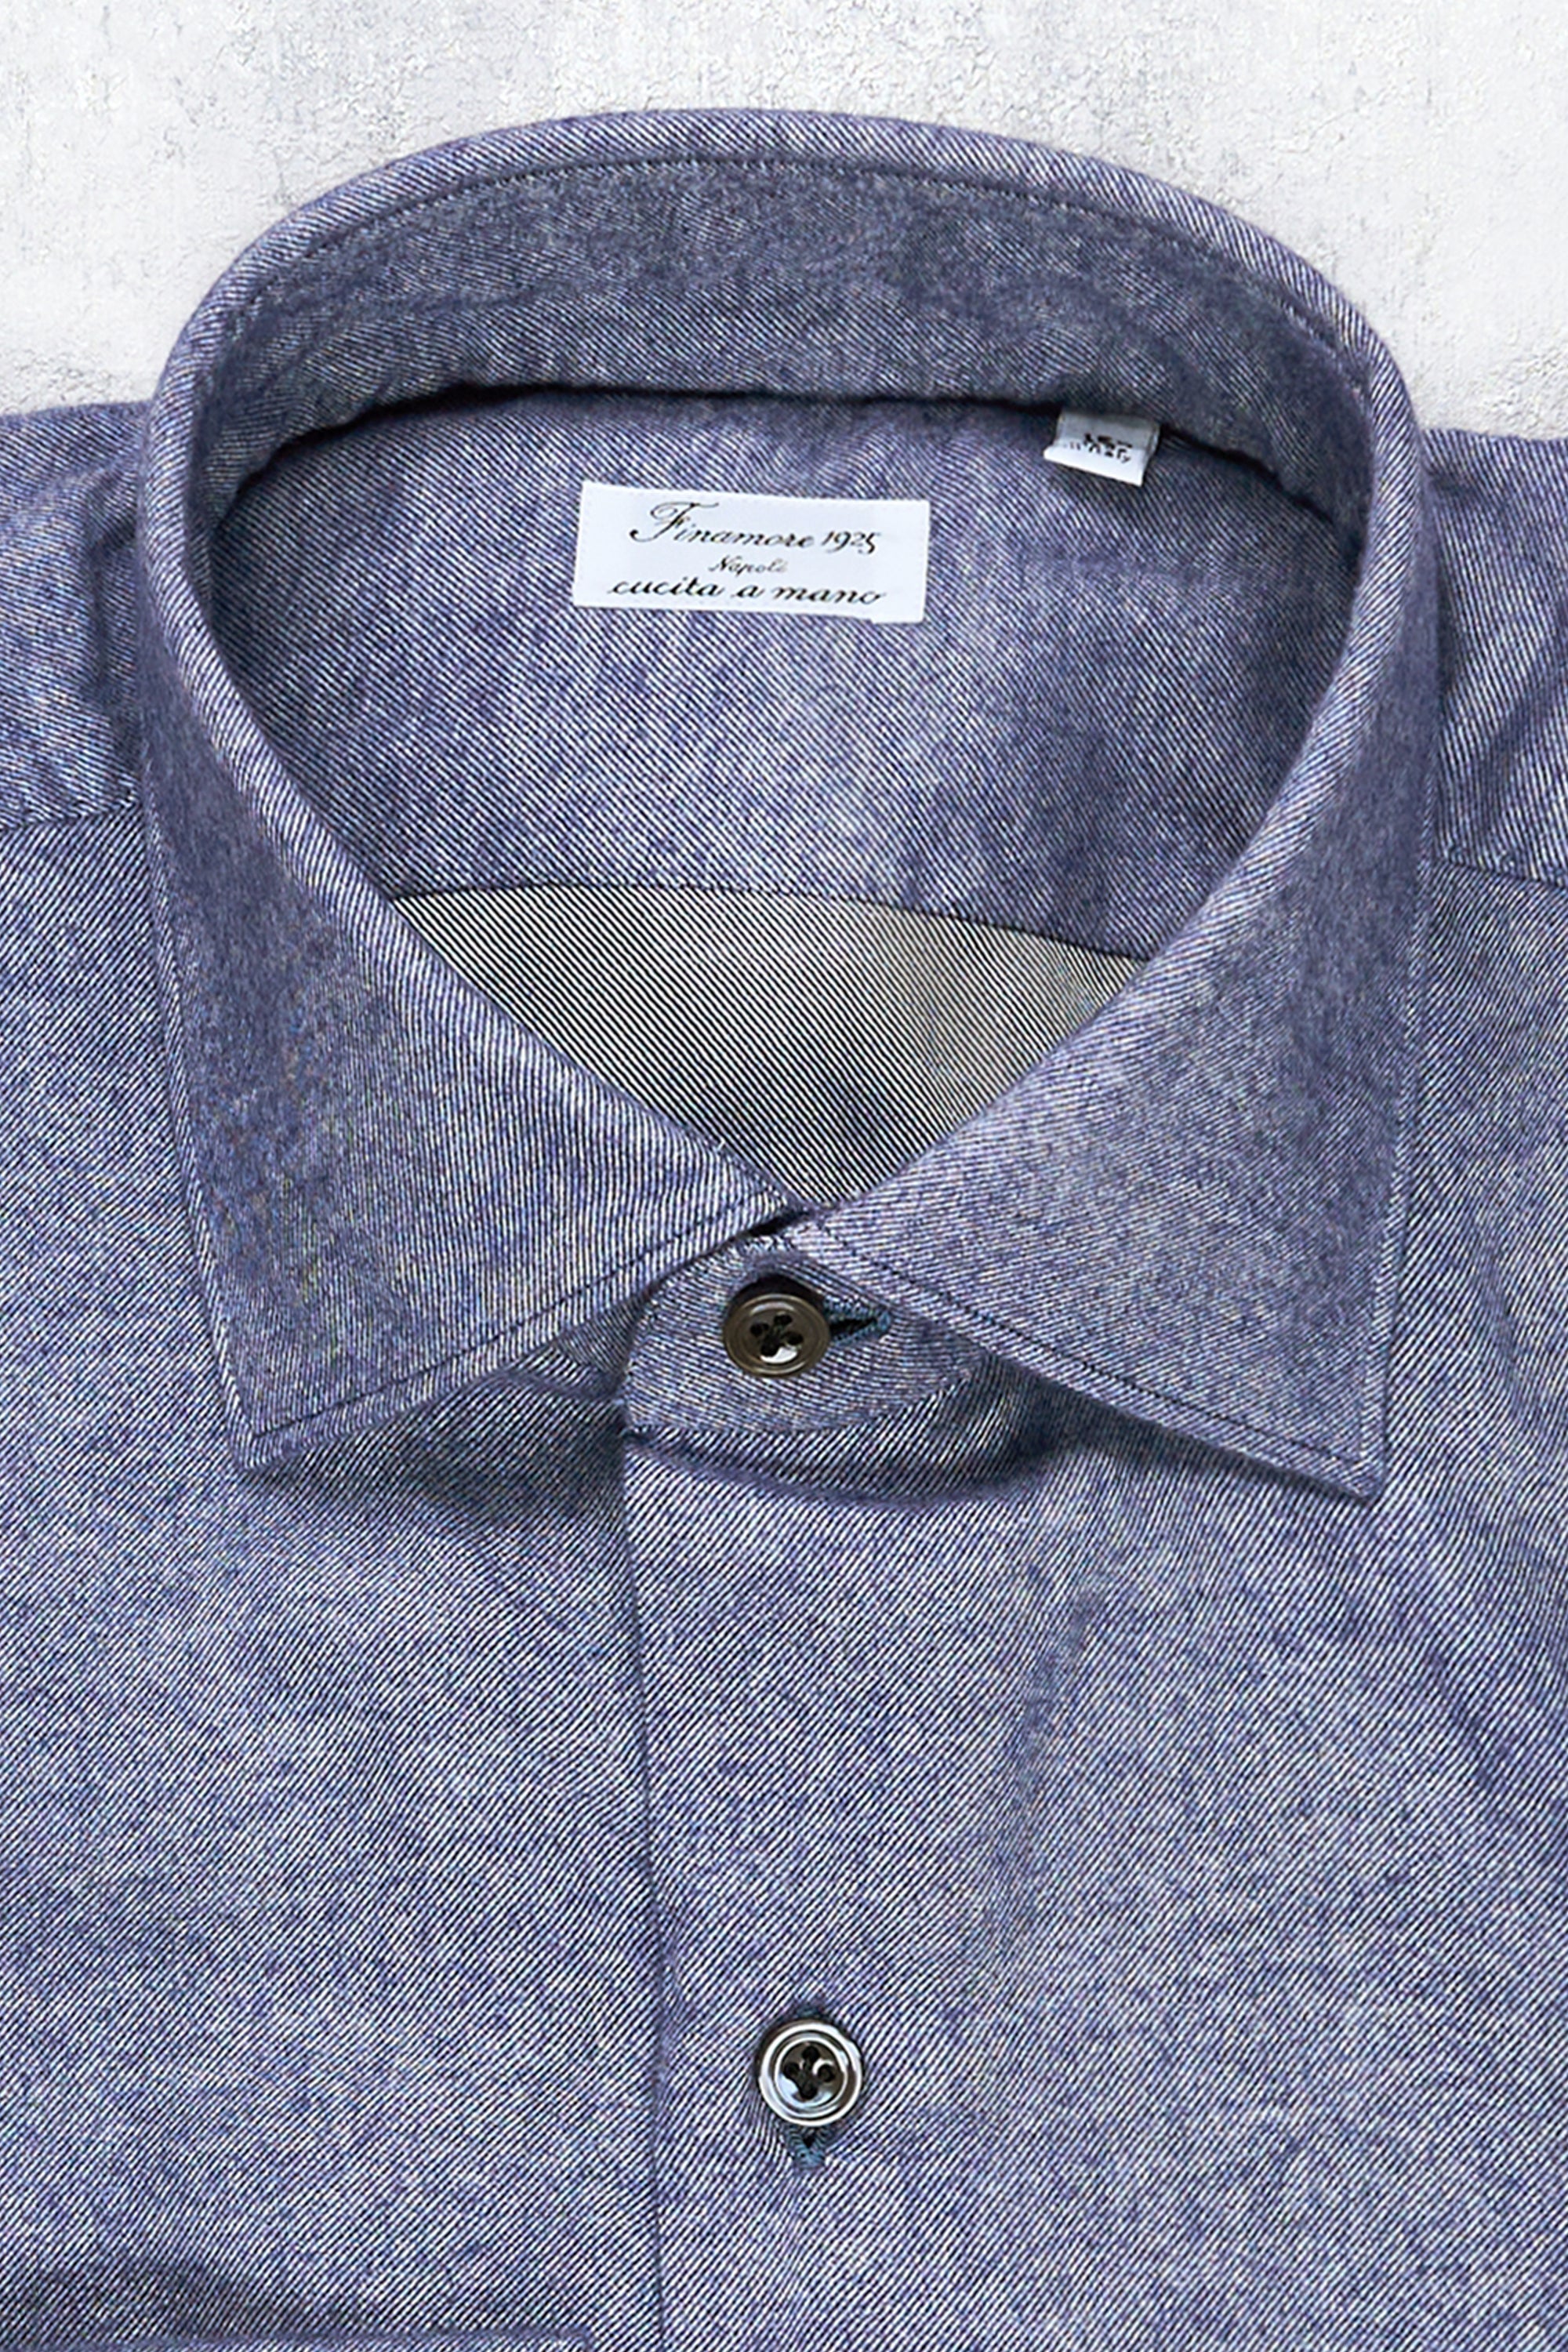 Finamore Purple-Blue Brushed Cotton Spread Collar Plain Shirt